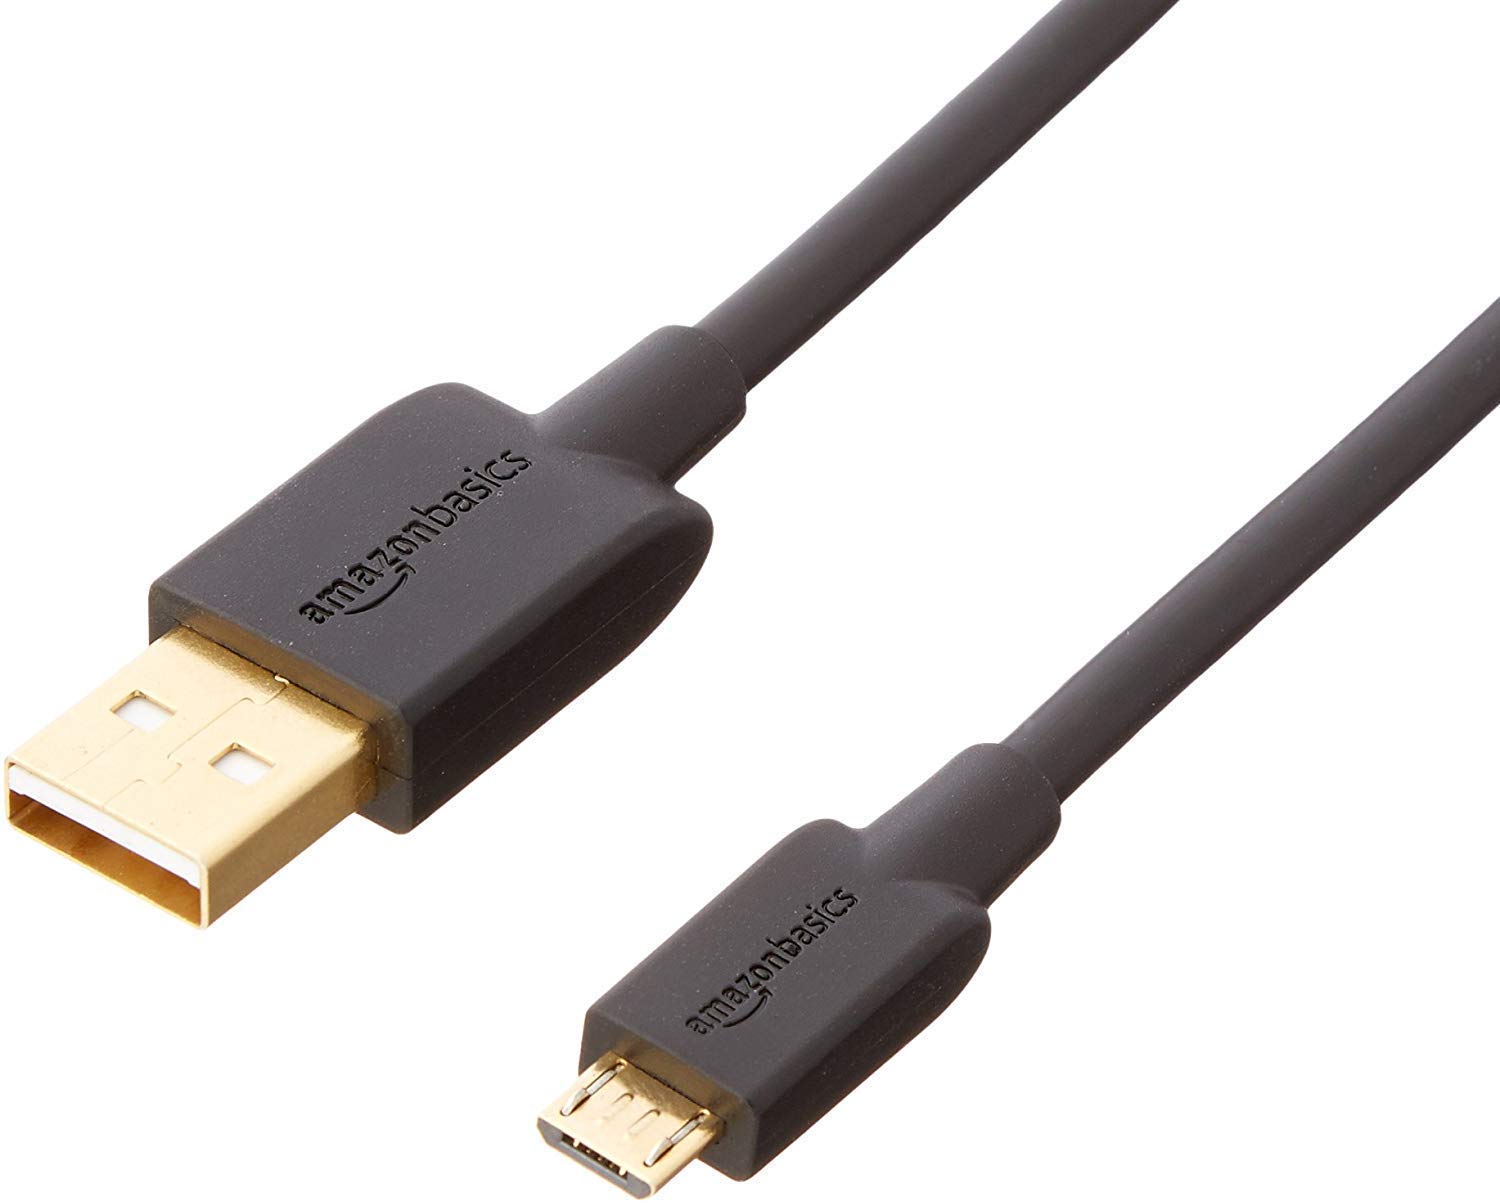 AmazonBasics USB 2.0 Charger Cable, 3-Foot